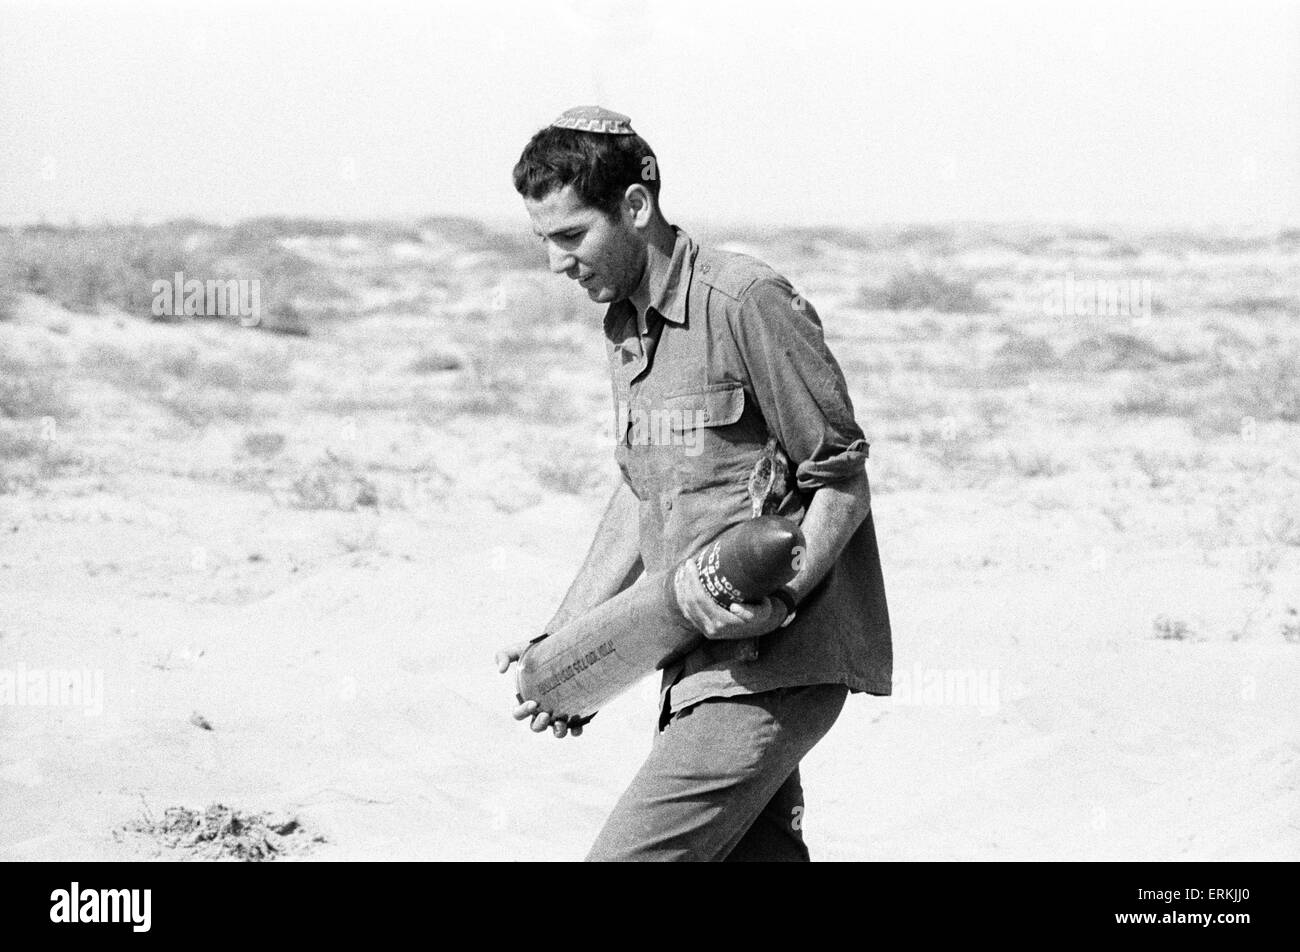 Yom Kippur War. The Fourth Arab Israeli War. October 6th to 25th, 1973. Israeli Soldier wearing Skullcap, carries artillery shell for tank. Sinai Desert. 9th October 1973. Stock Photo